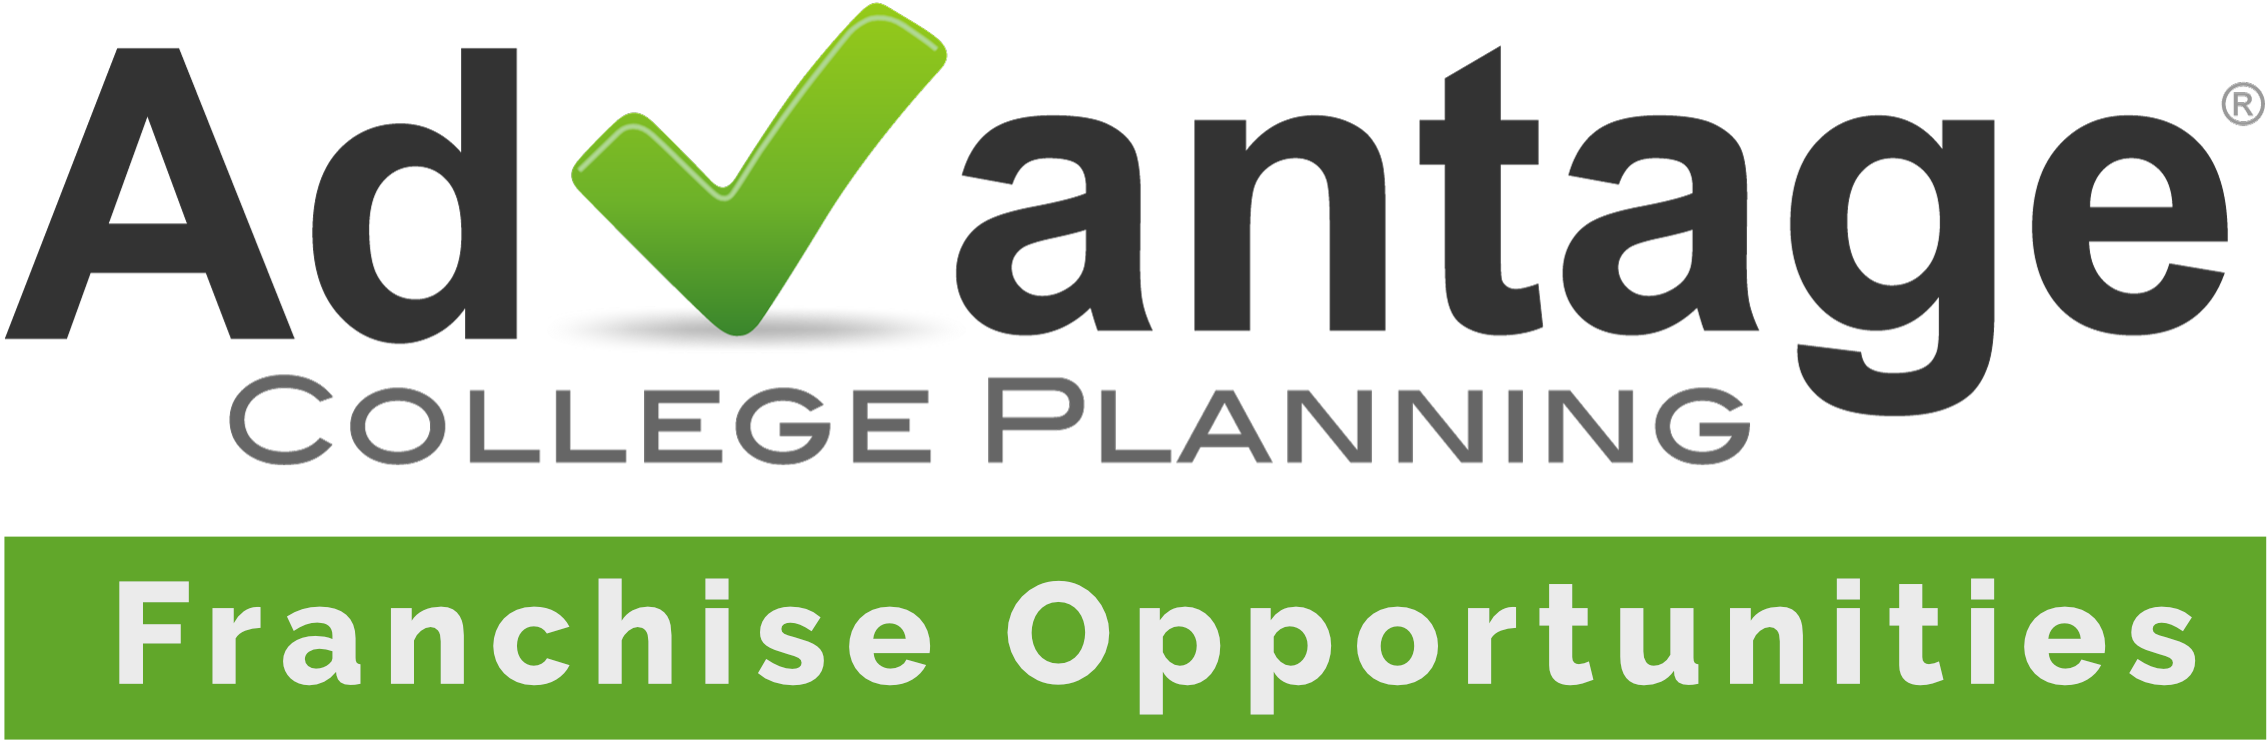 Advantage College Planning Franchise